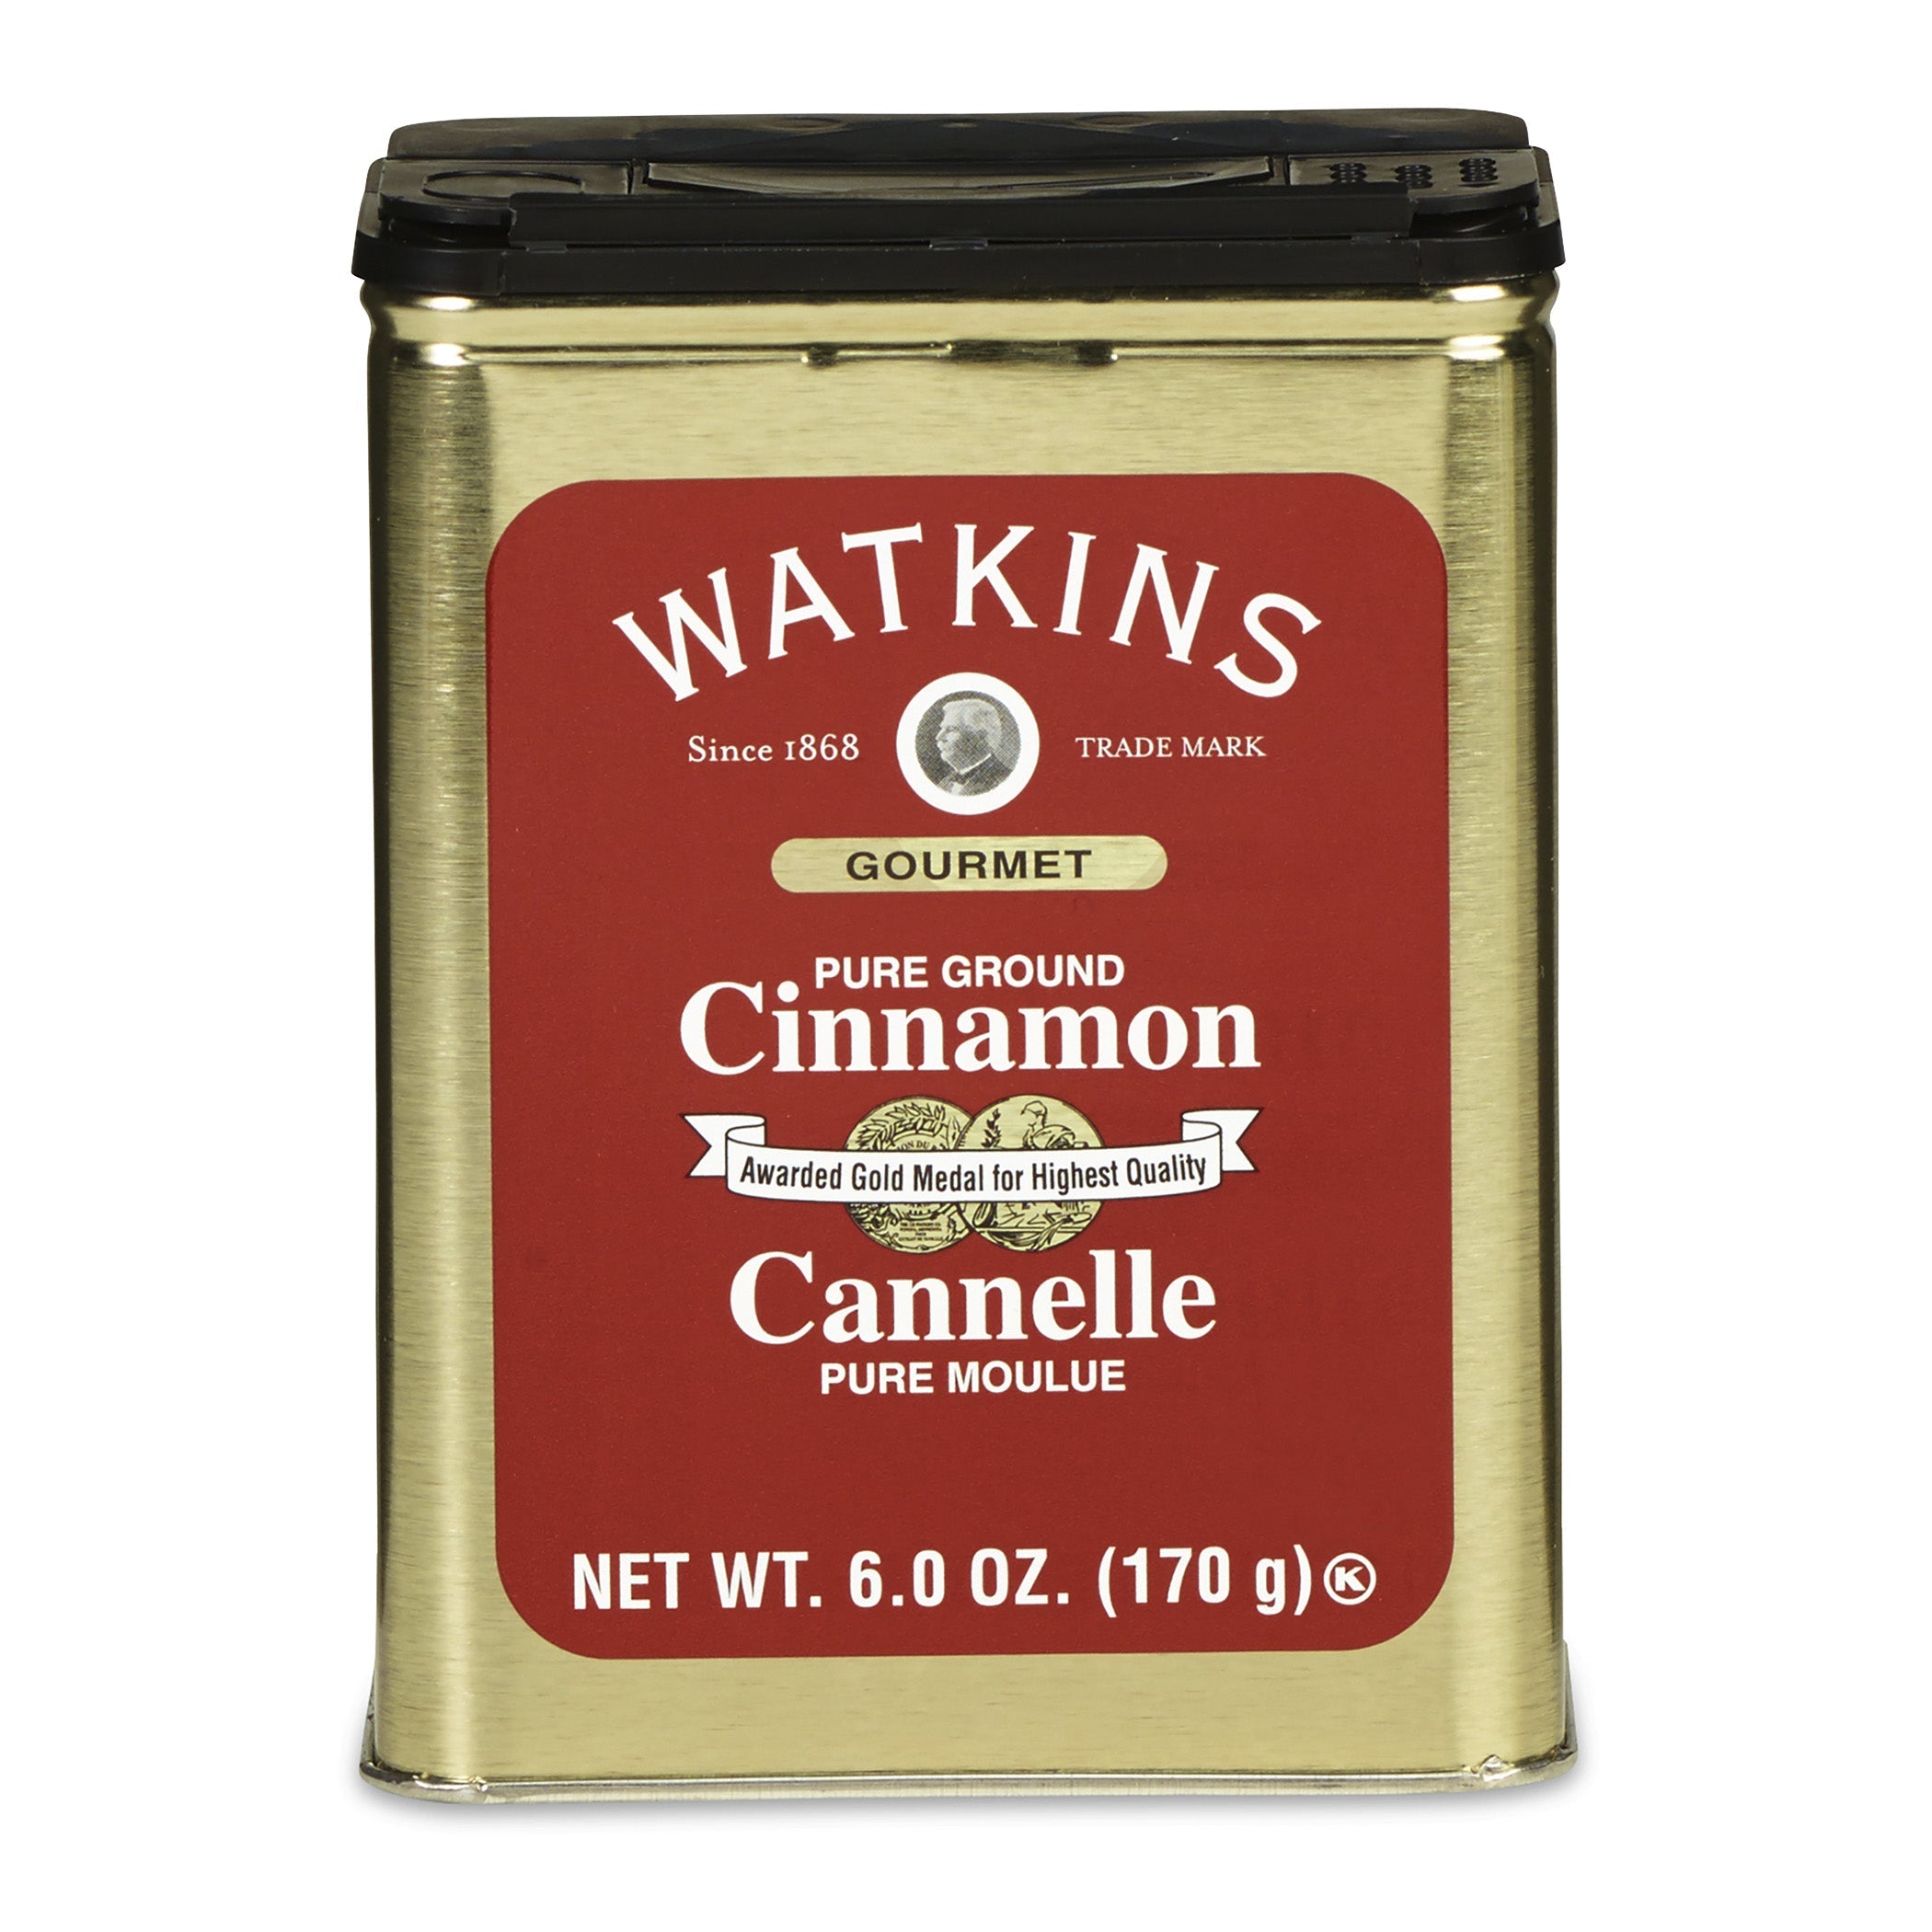 Watkins Pure Ground Cinnamon Spice Tin